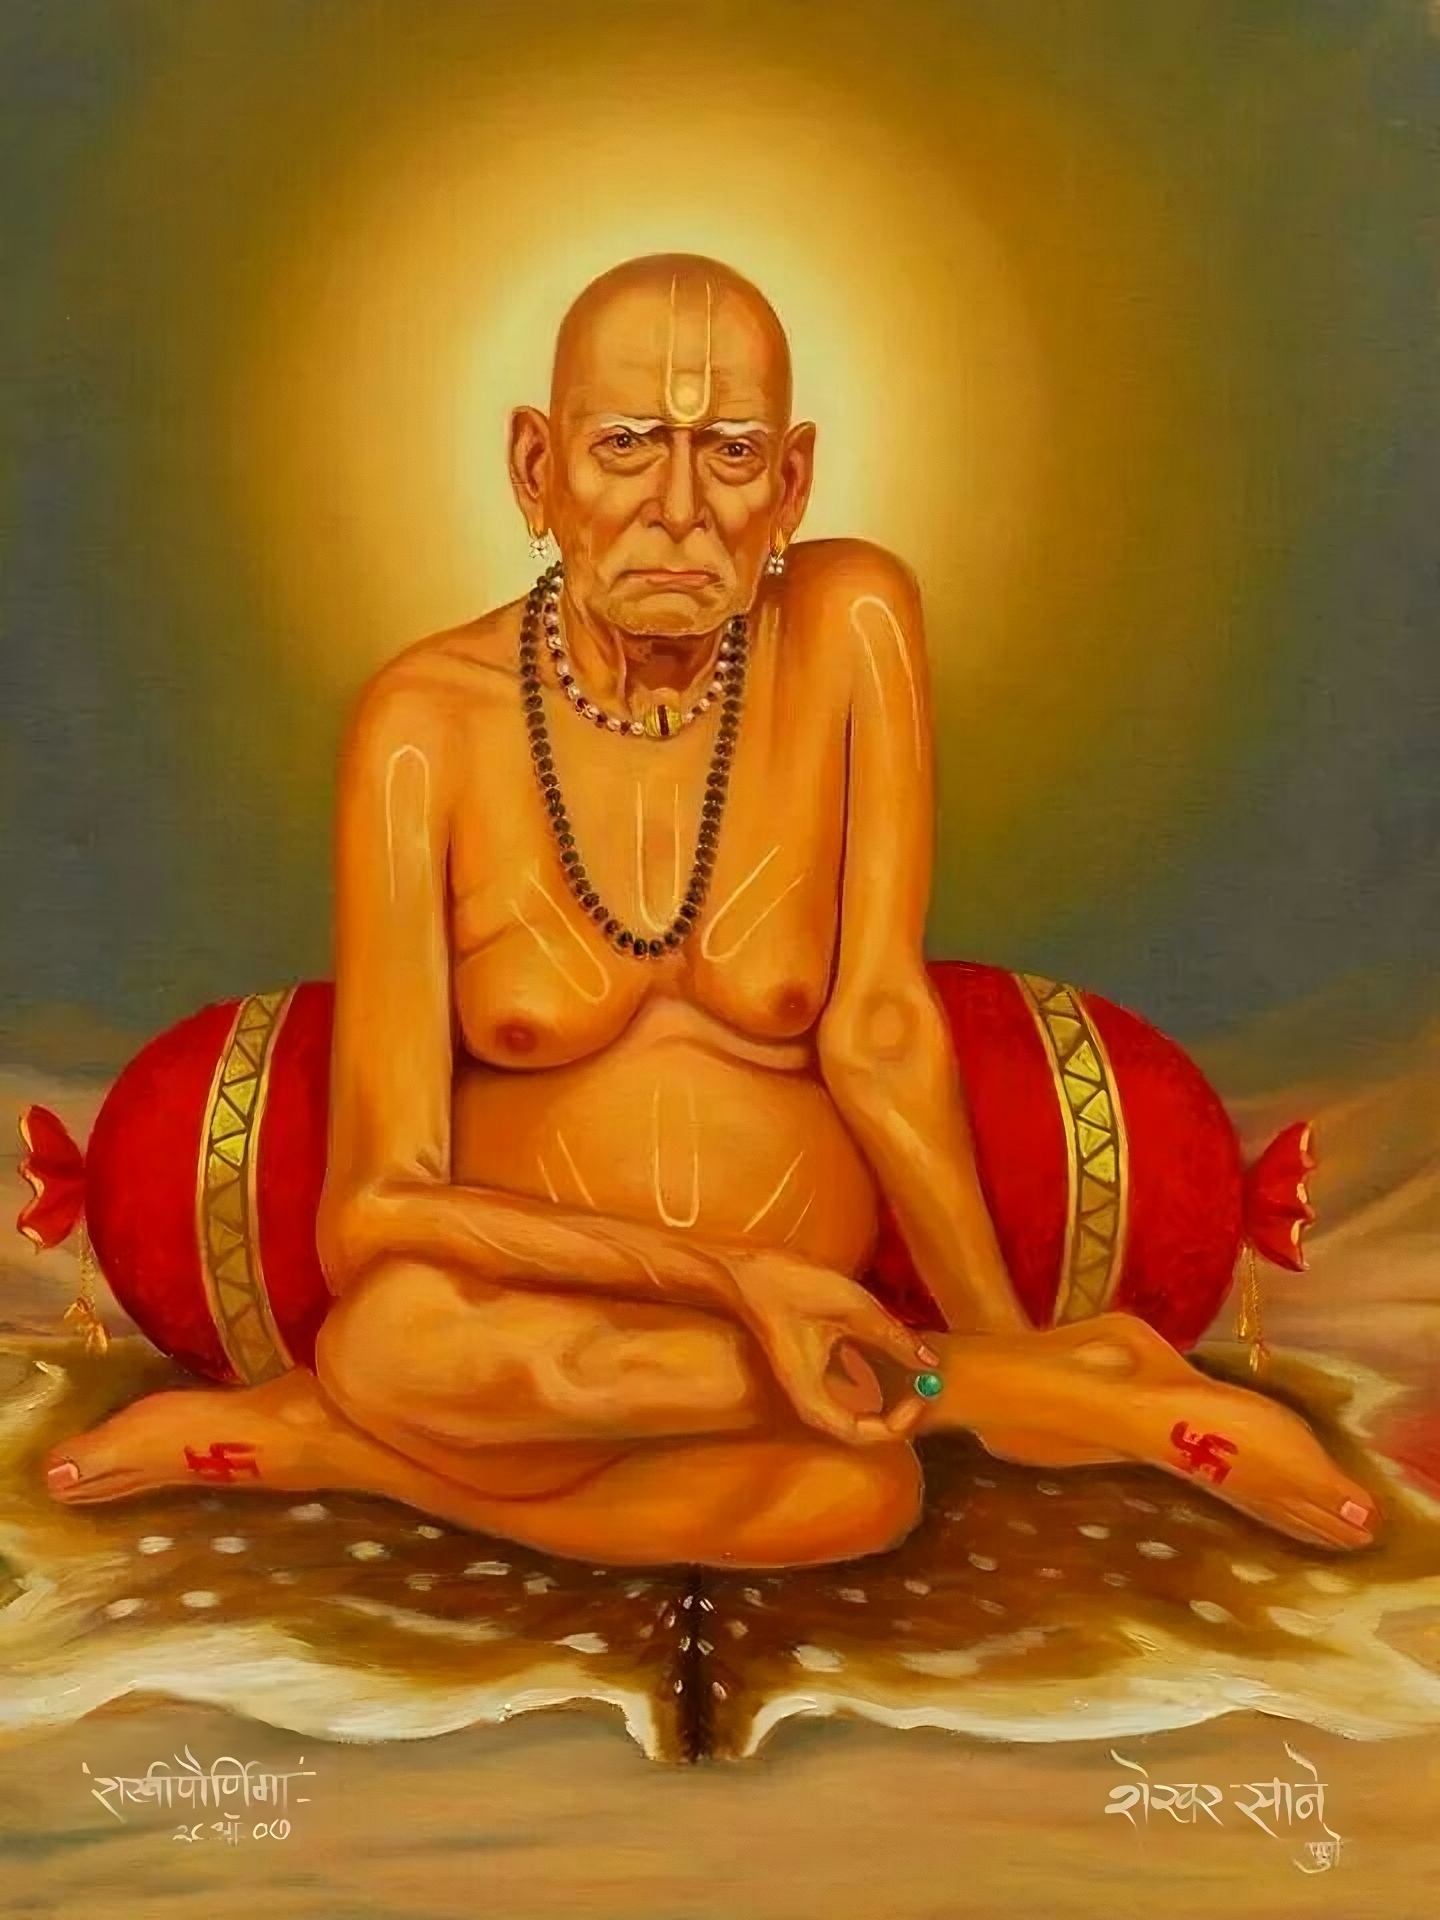 Swami Samarth Hd - swami samarth